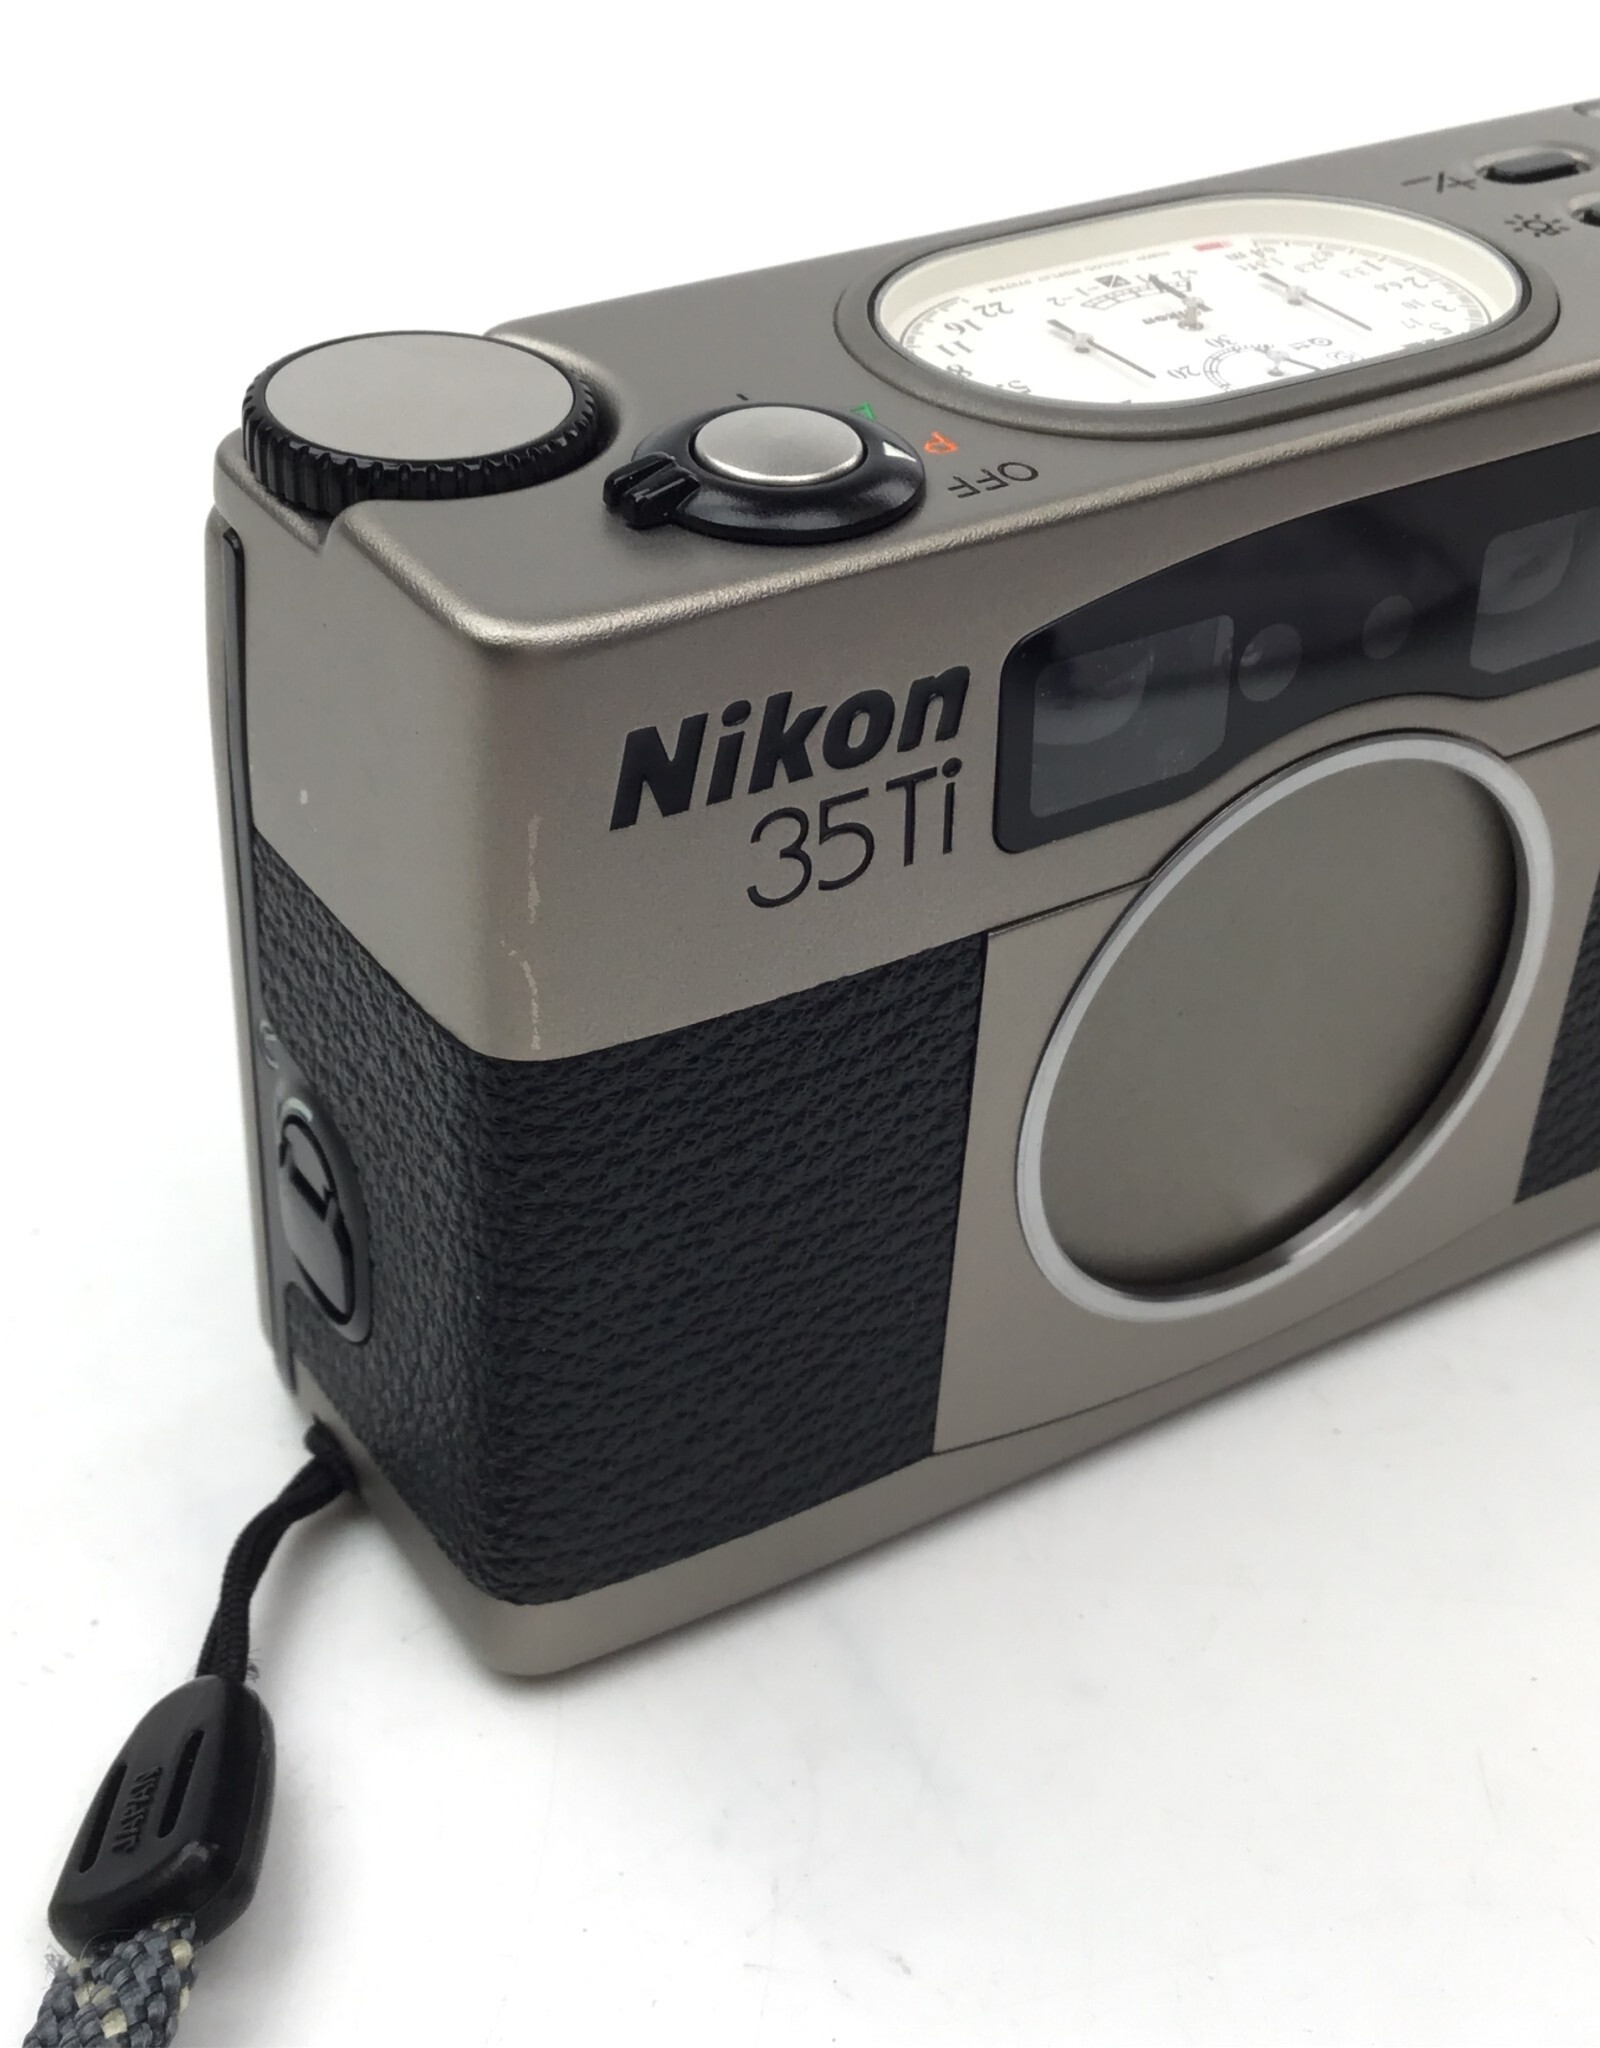 NIKON Nikon 35Ti Quartz Date Camera in Box Used EX